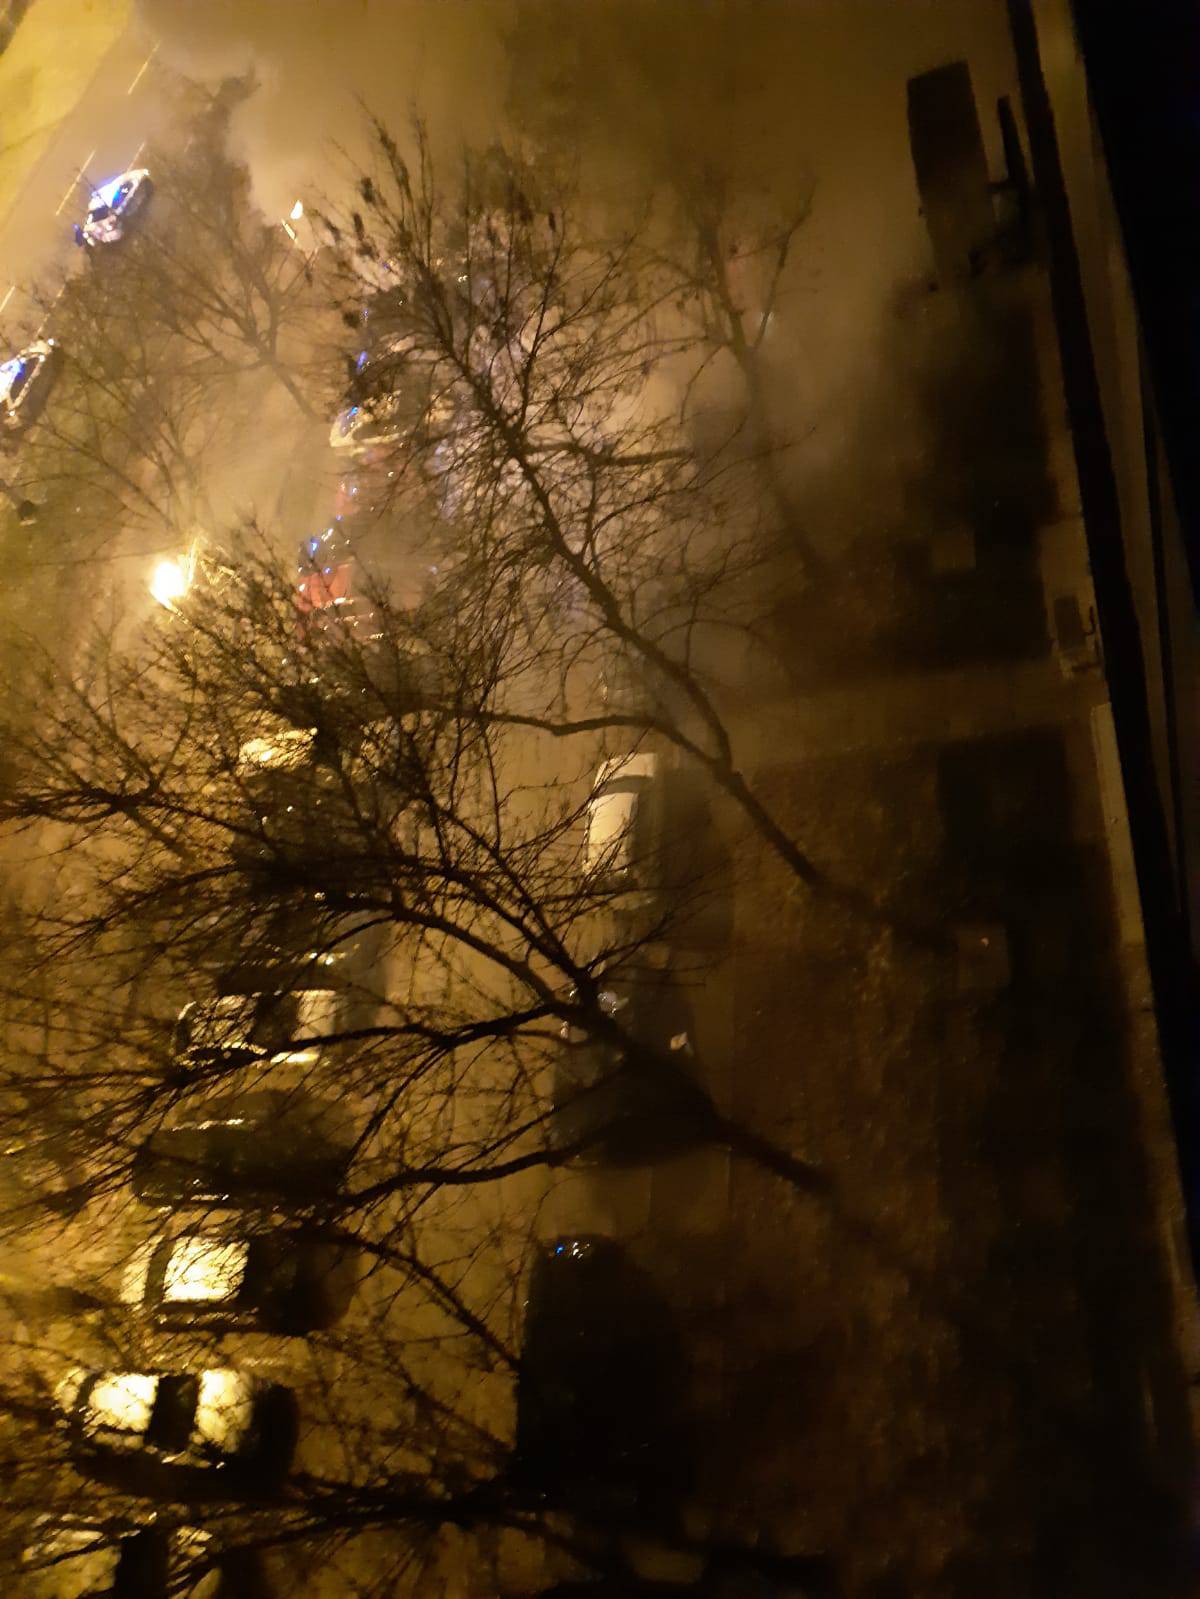 VIDEO Veliki požar u Utrinama, izgorjela tri auta: 'Eksplozije su se čule, vatra je šikljala svuda!'